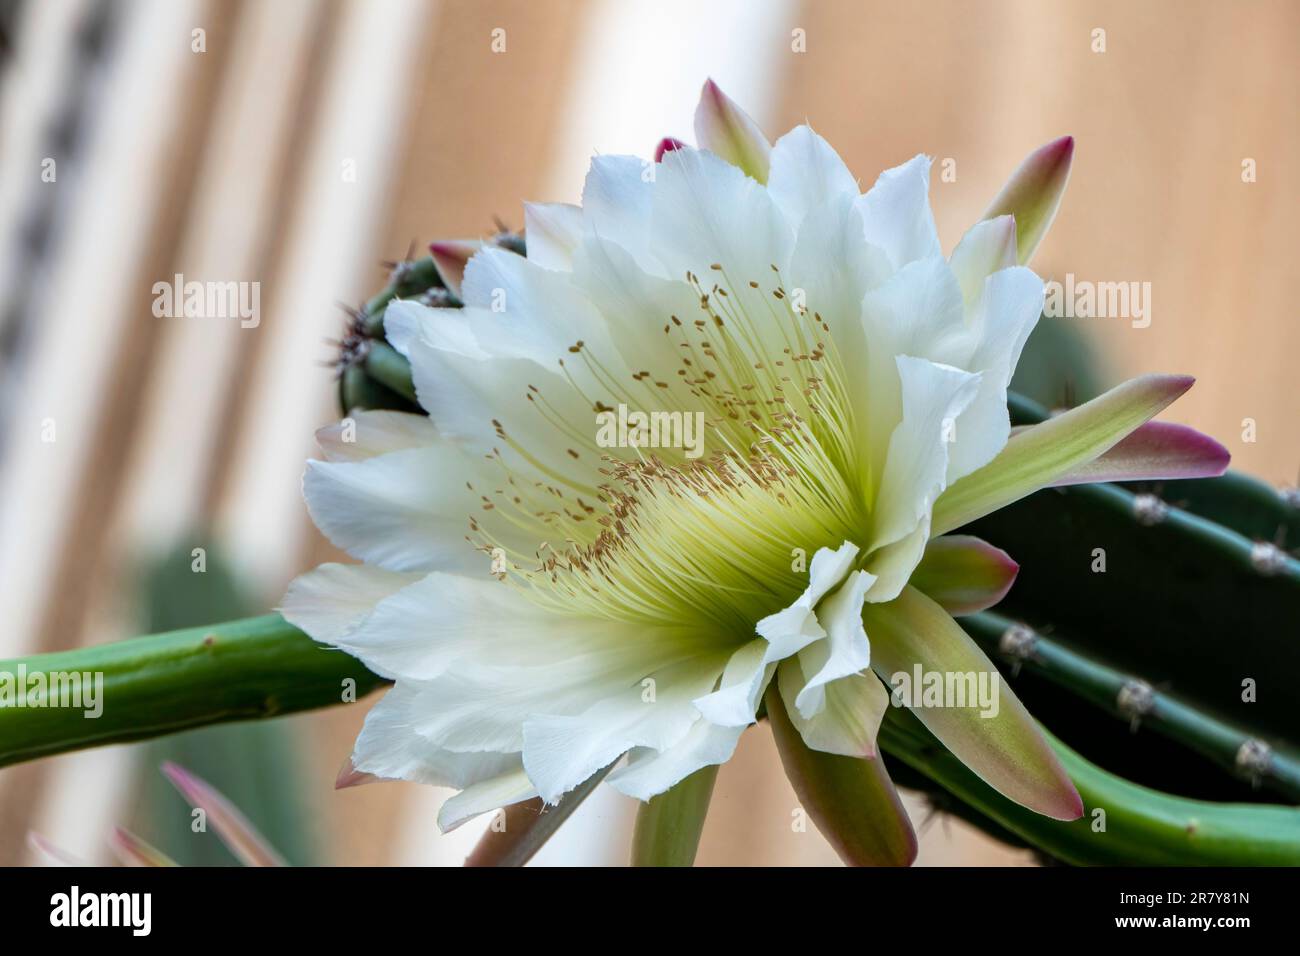 Peruanischer Apfelkaktus oder Hedge Cactus oder Cereus hildmannianus in voller Blüte aus nächster Nähe. Israel Stockfoto